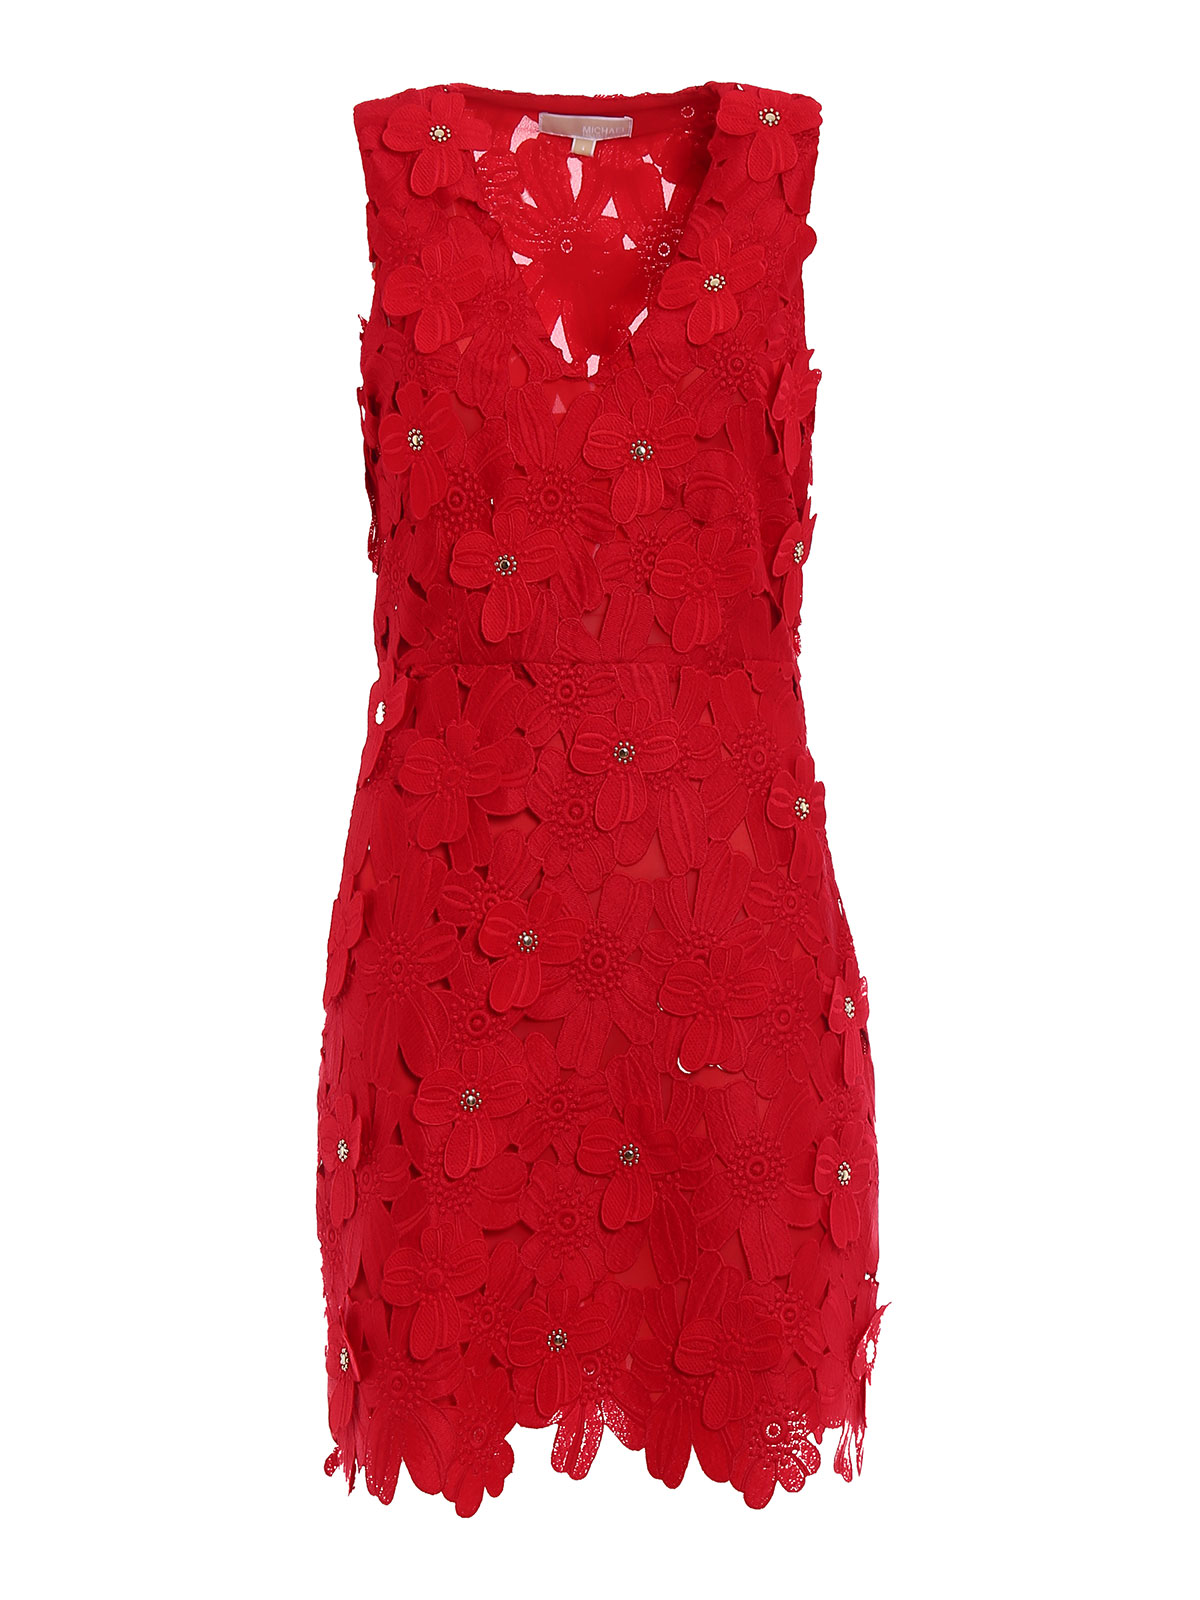 michael kors red floral dress